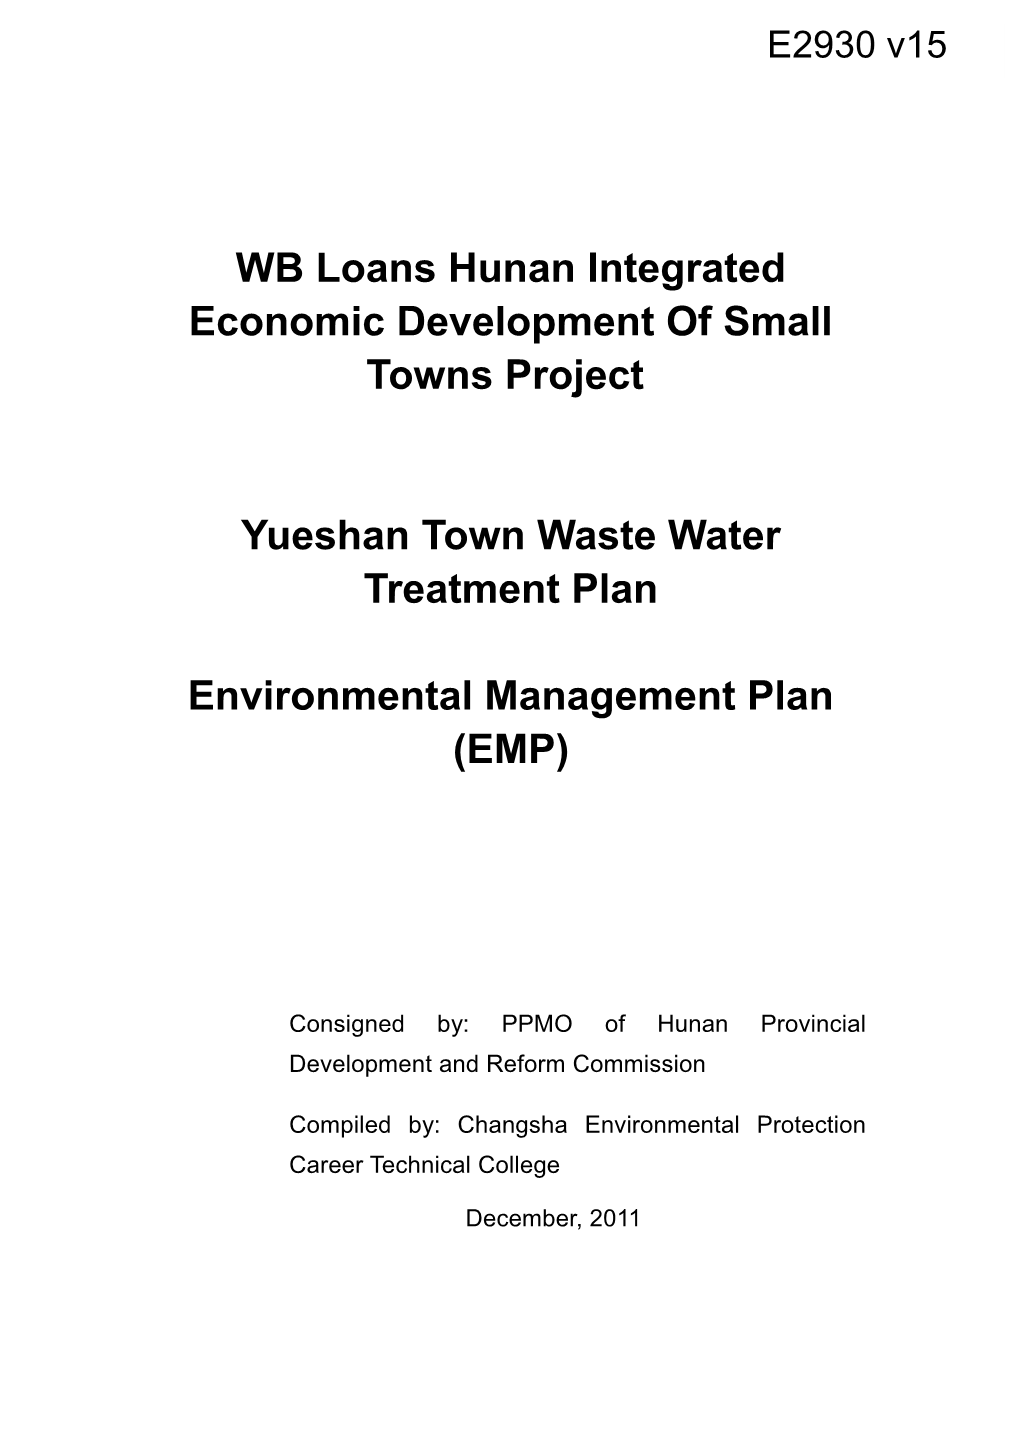 Xiangxiang Yueshan Town Project Under Hunan Province Utilizing WB Loans to Construct The